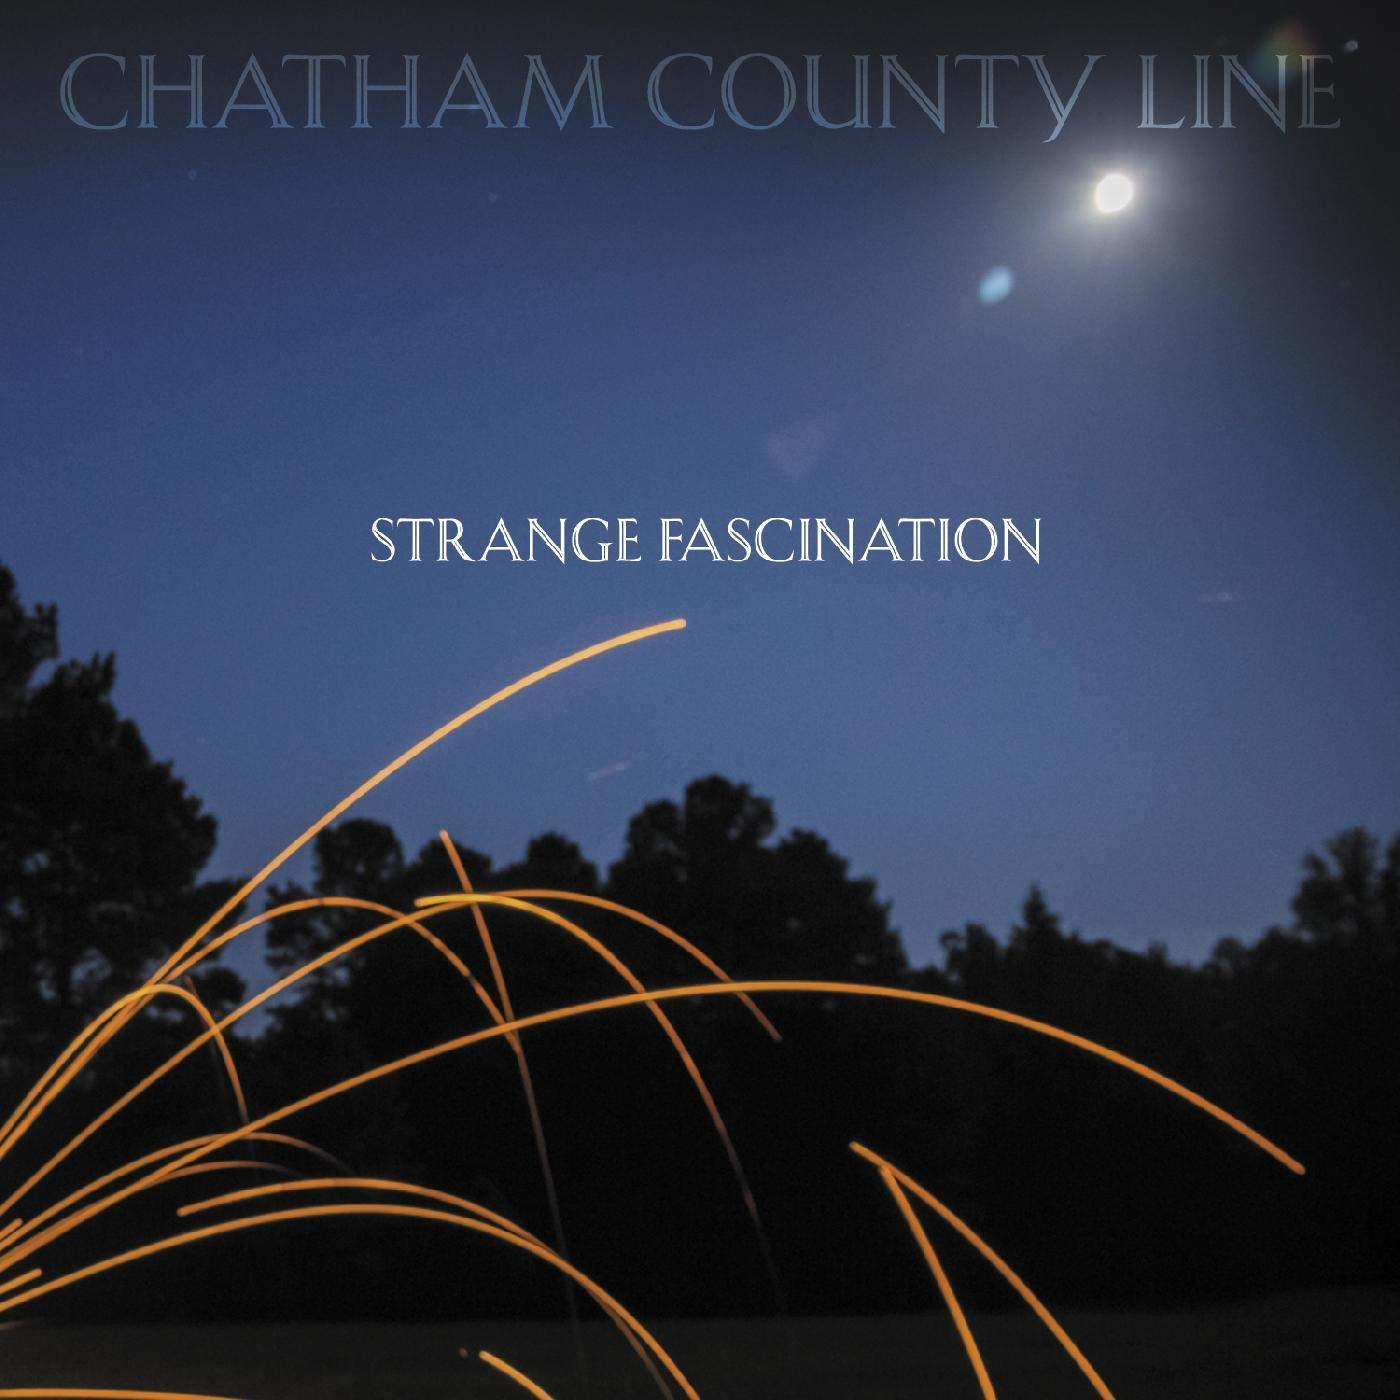 Chatham County Line FASCINATION (Vinyl) - STRANGE 